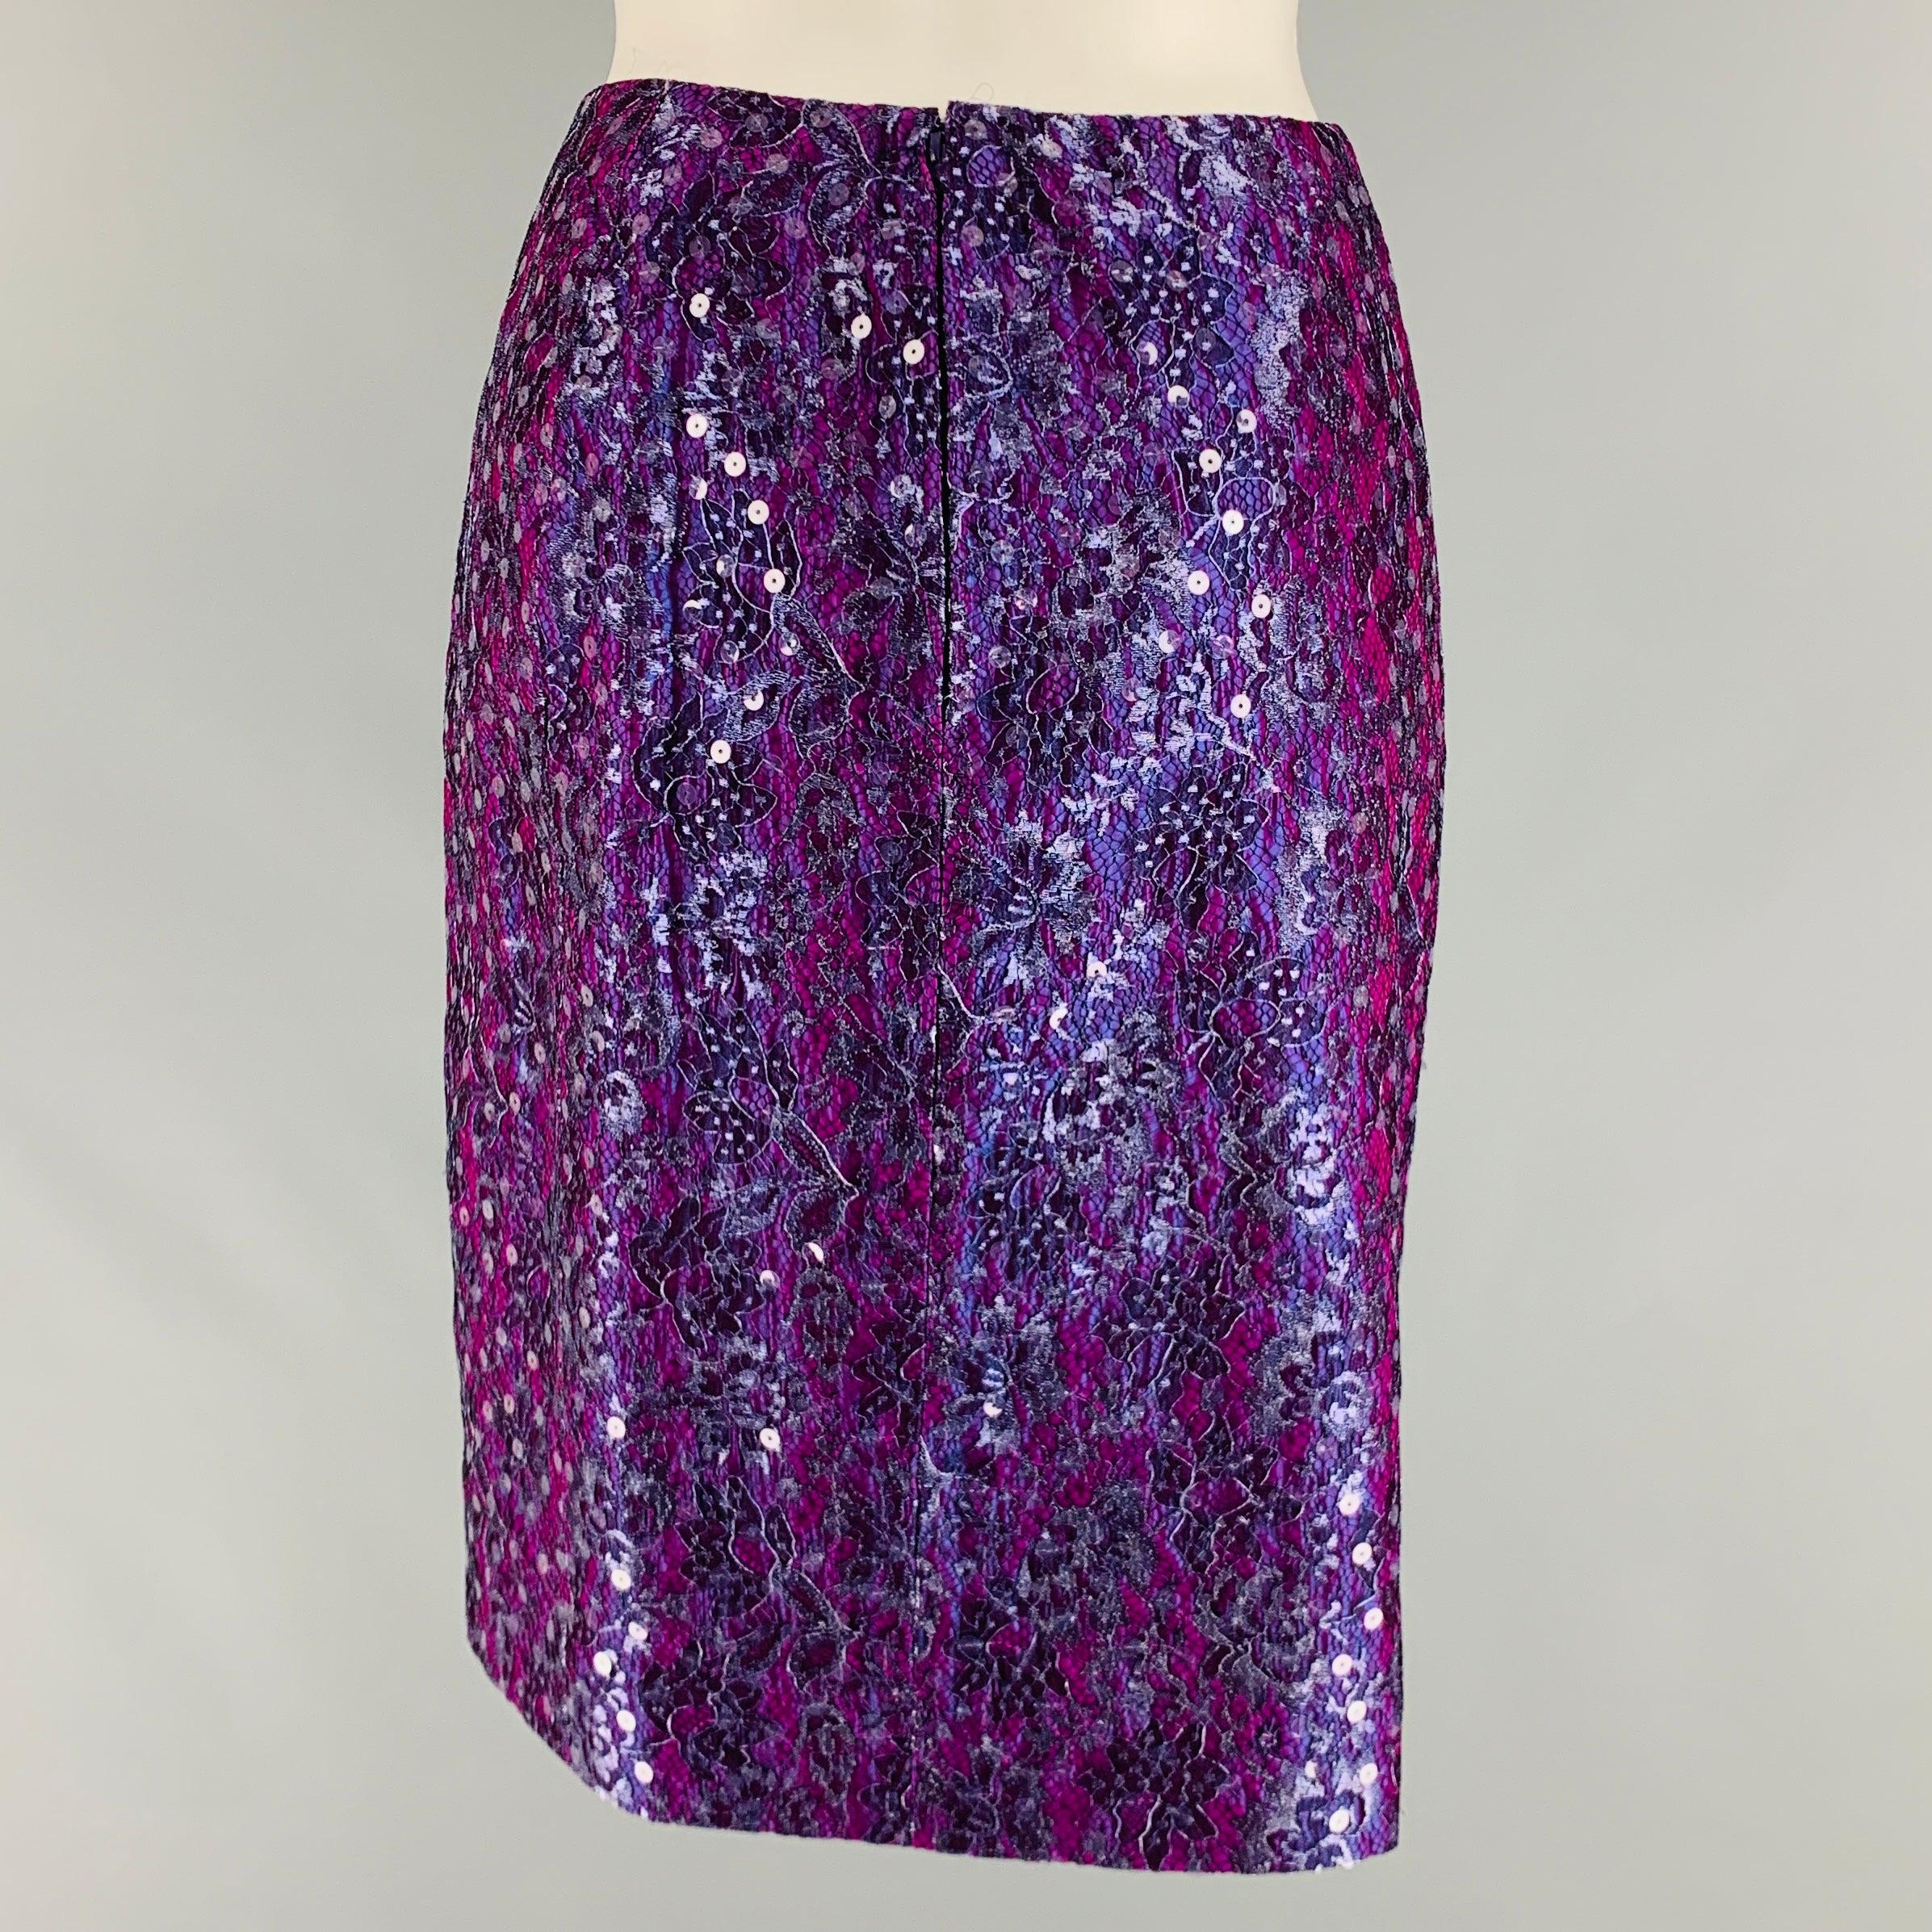 GEOFFREY BEENE Taille 6 Purple Silver Lace Below Knee Skirt (Jupe de dessous de genou en dentelle) Pour femmes en vente